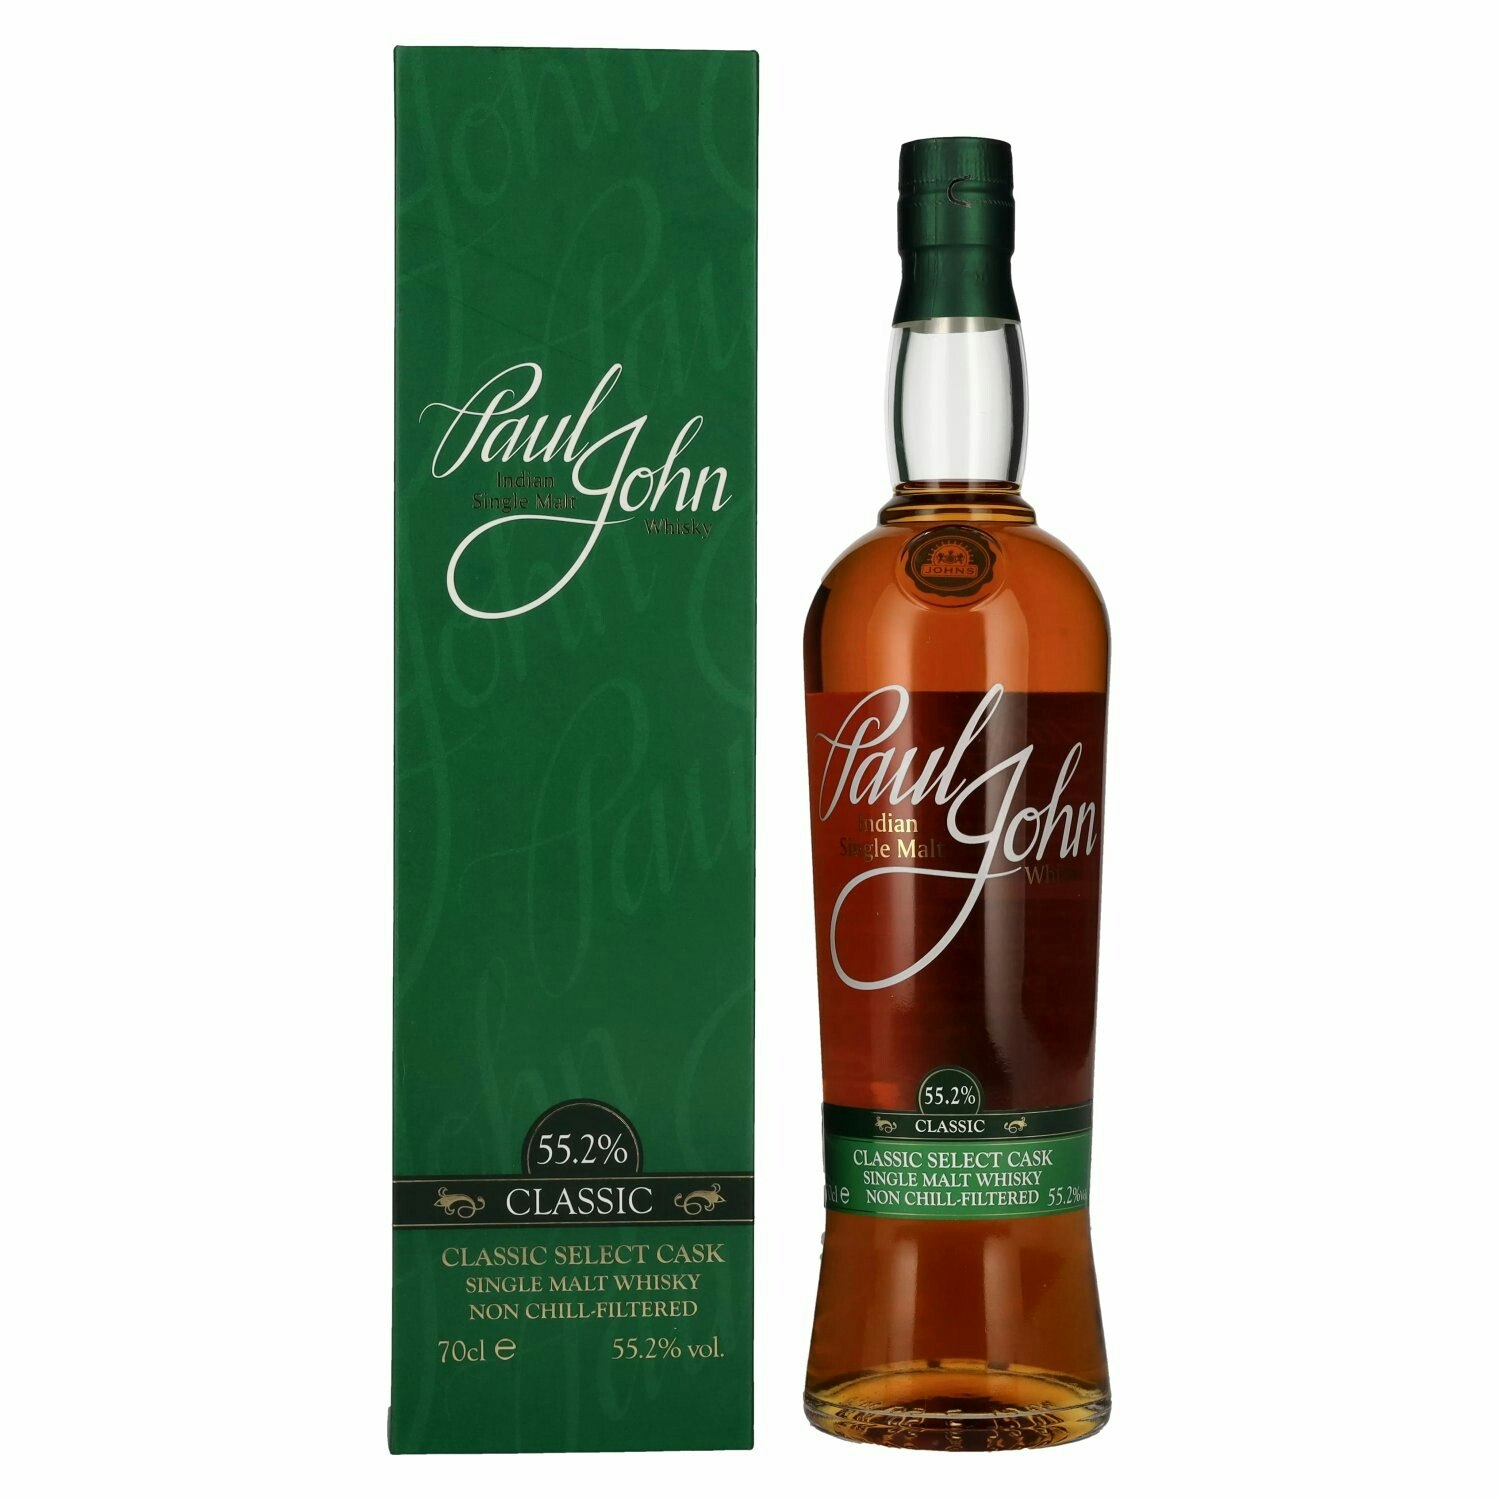 Paul John CLASSIC Select Cask Indian Single Malt Whisky 55,2% Vol. 0,7l in Giftbox